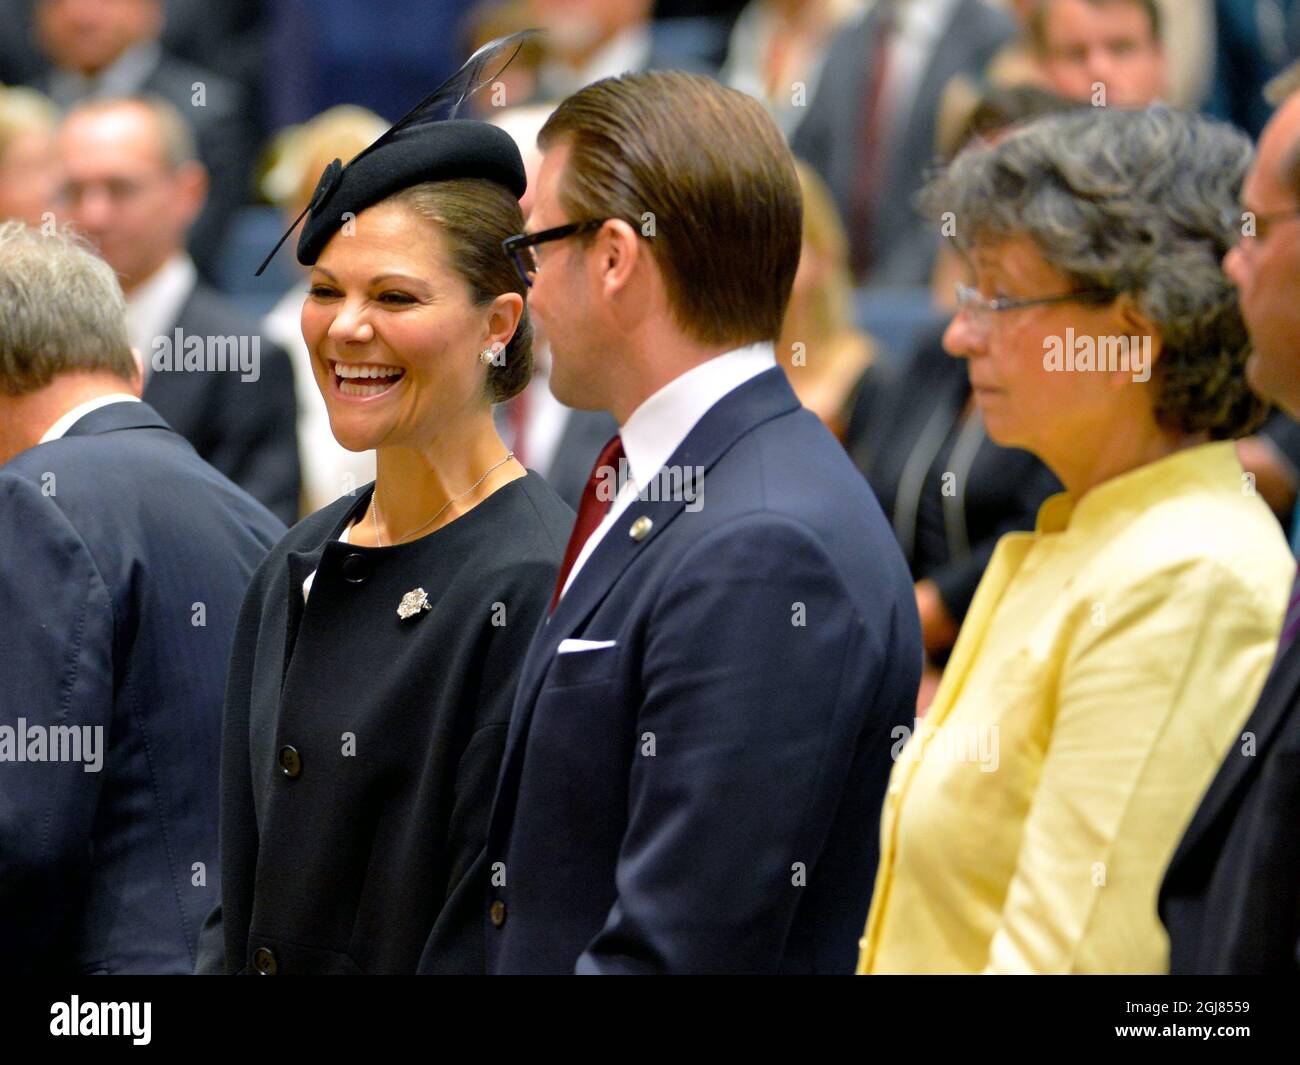 STOCKHOLM 2013-09-17 Crown Princess Victoria and Prince Daniel King Carl Gustaf arrive to the opening of the Parliament in Stockholm, Sweden, September 17, 2013 Foto: Jonas Ekstromer / SCANPIX / Kod 10030  Stock Photo